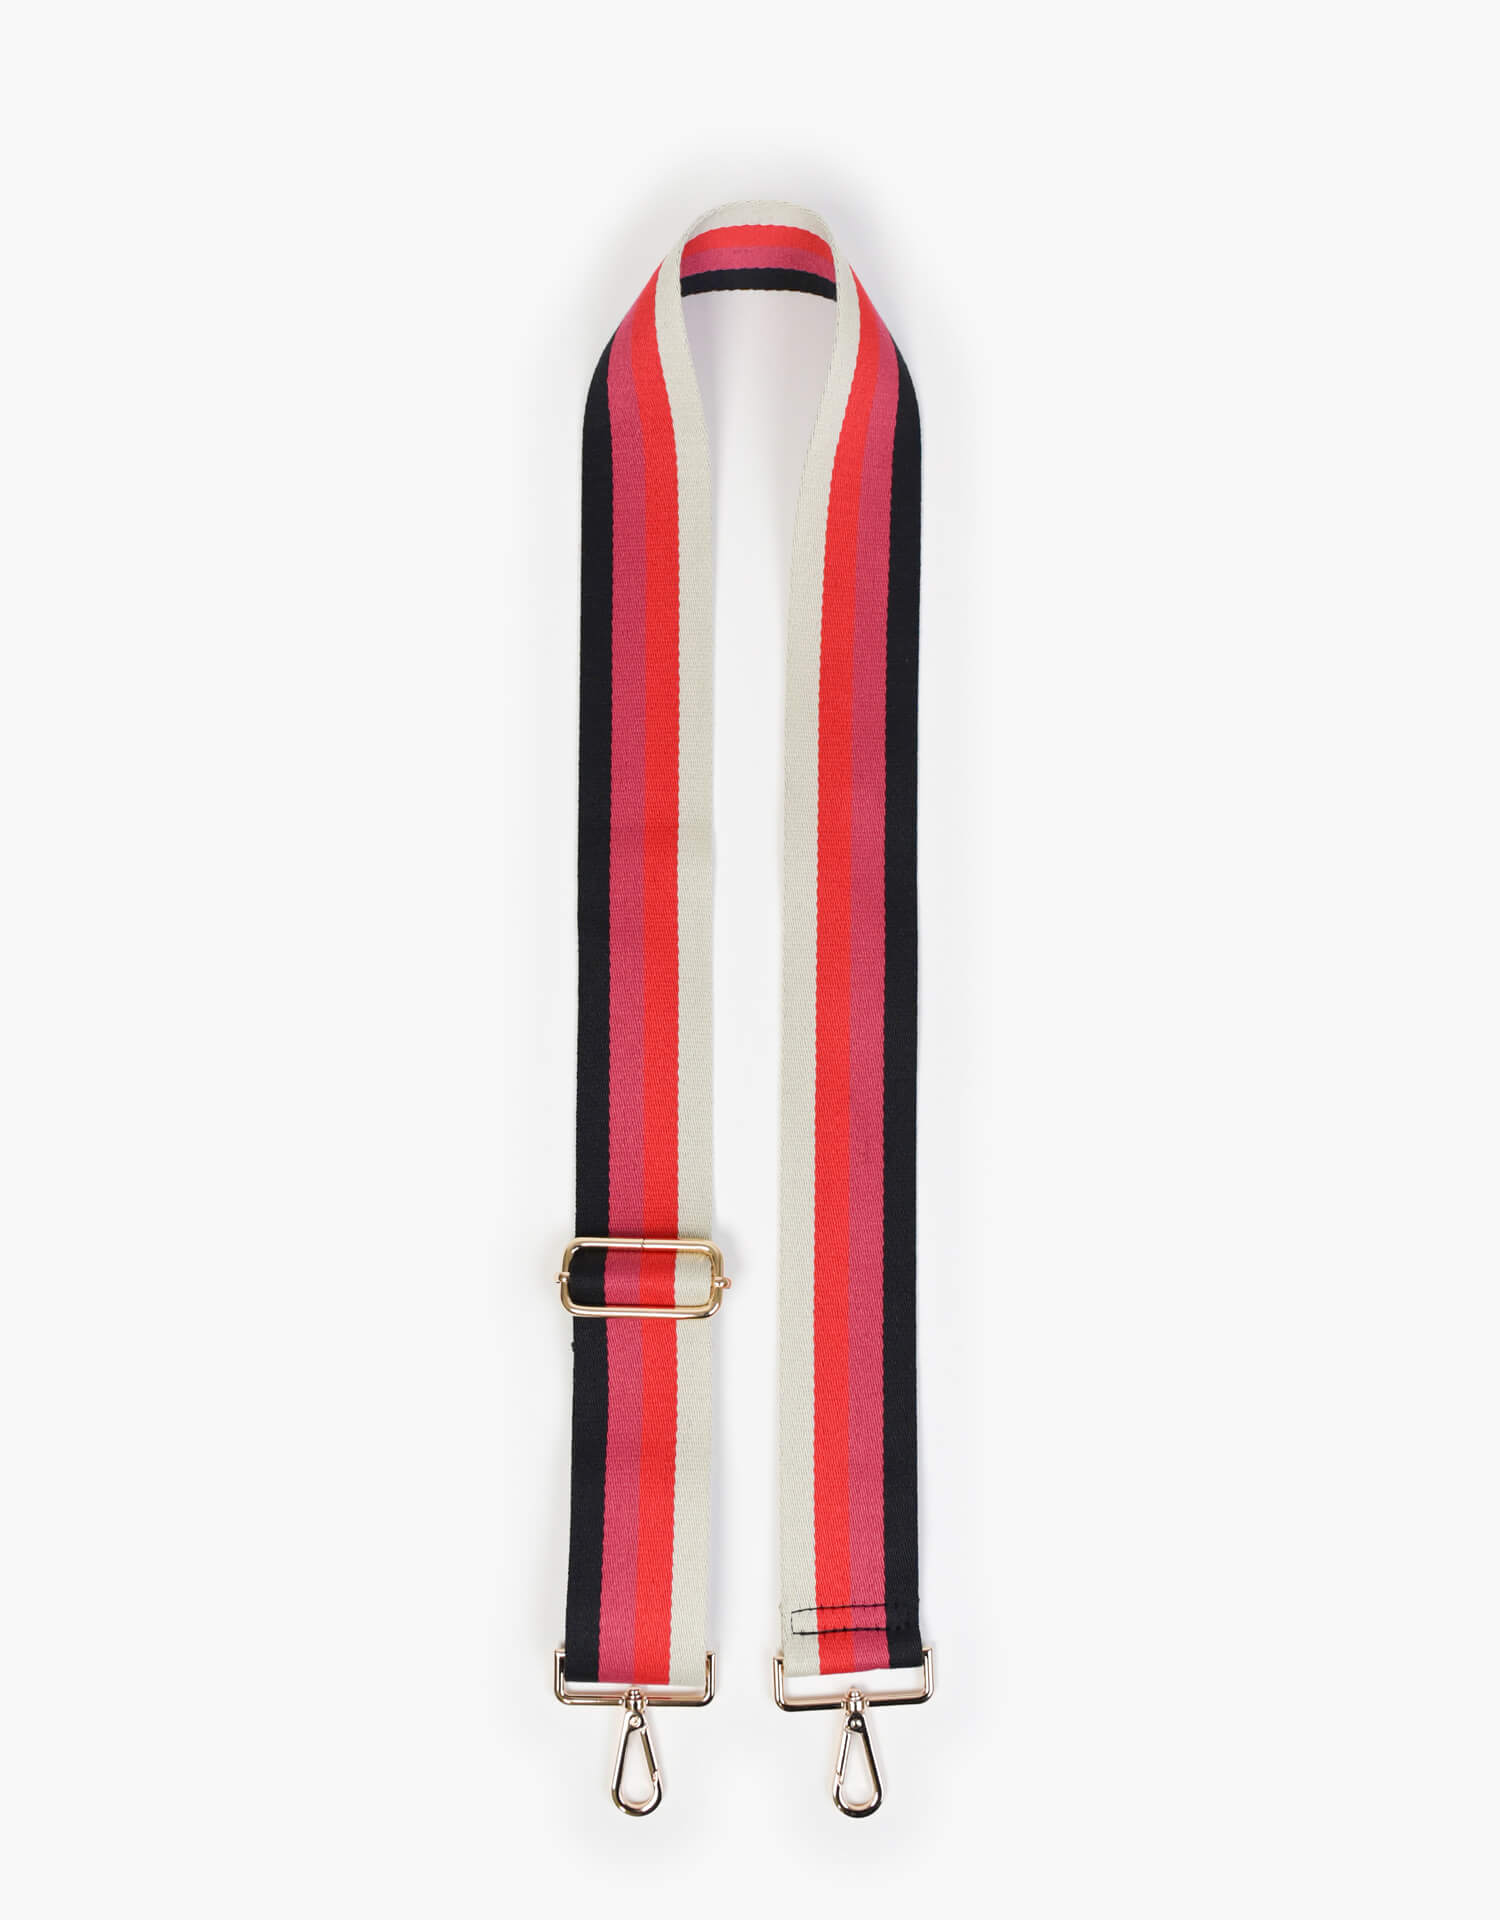 coco alexander diaper bag red stripe canvas strap